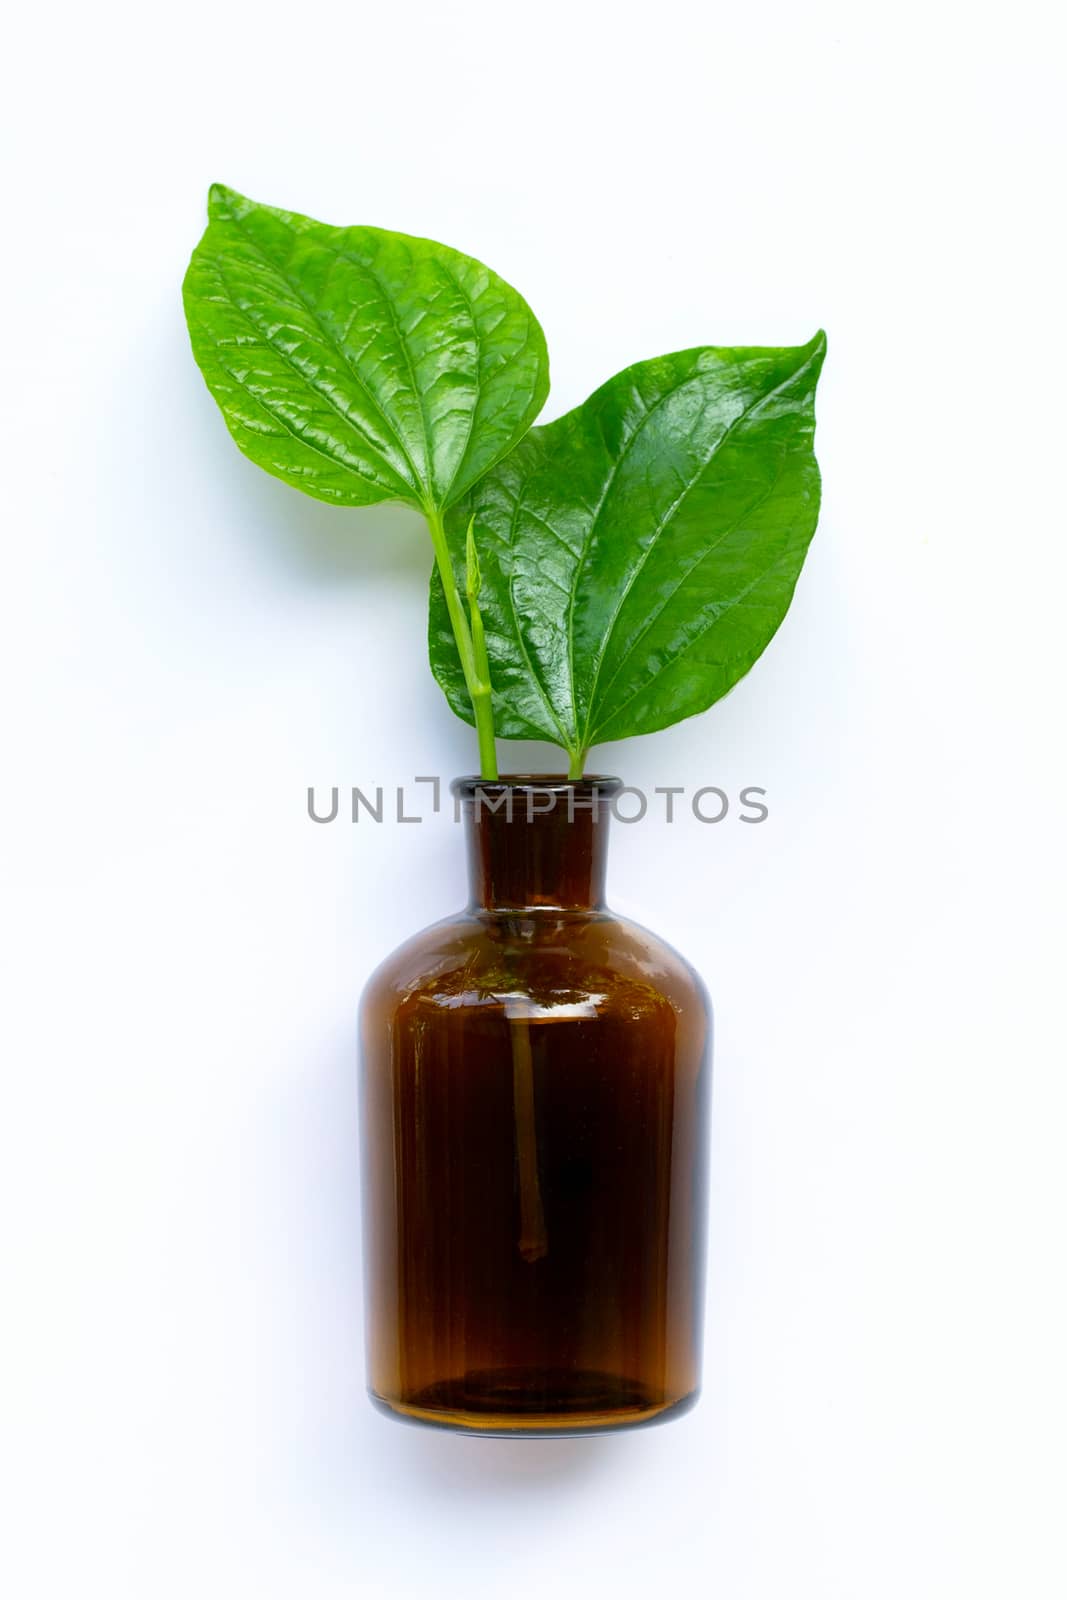 Piper sarmentosum or wildbetal leafbush with essential oil bottl by Bowonpat